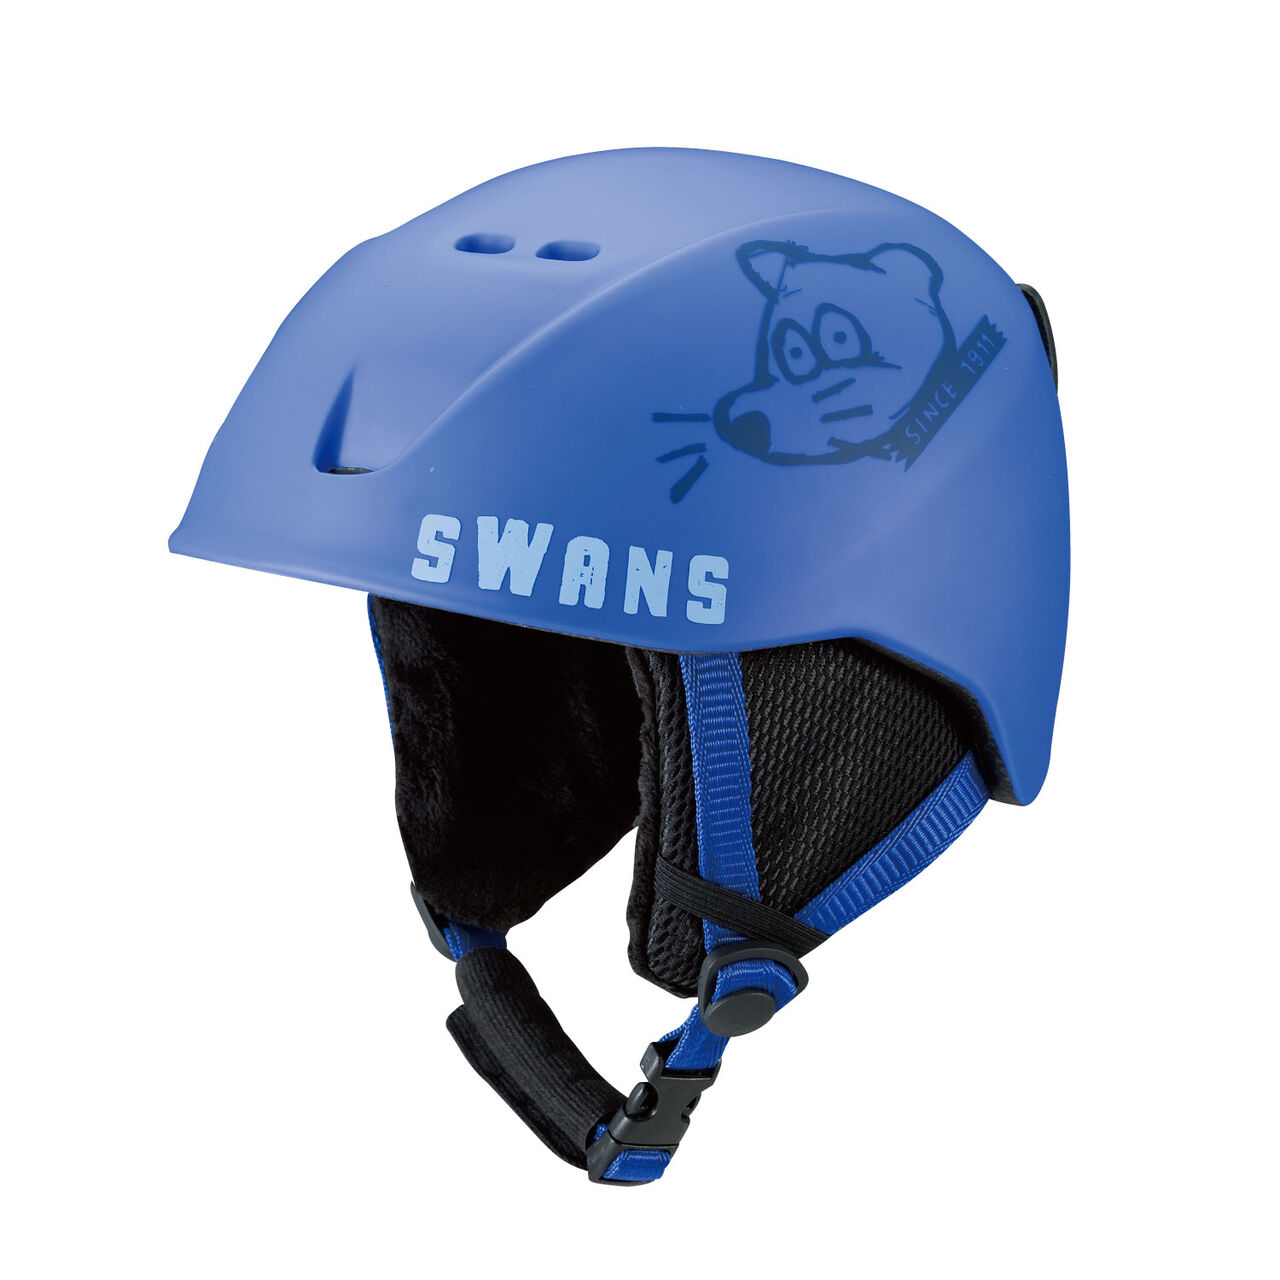 H-57 youth helmet Blue,Opt2, large image number 0